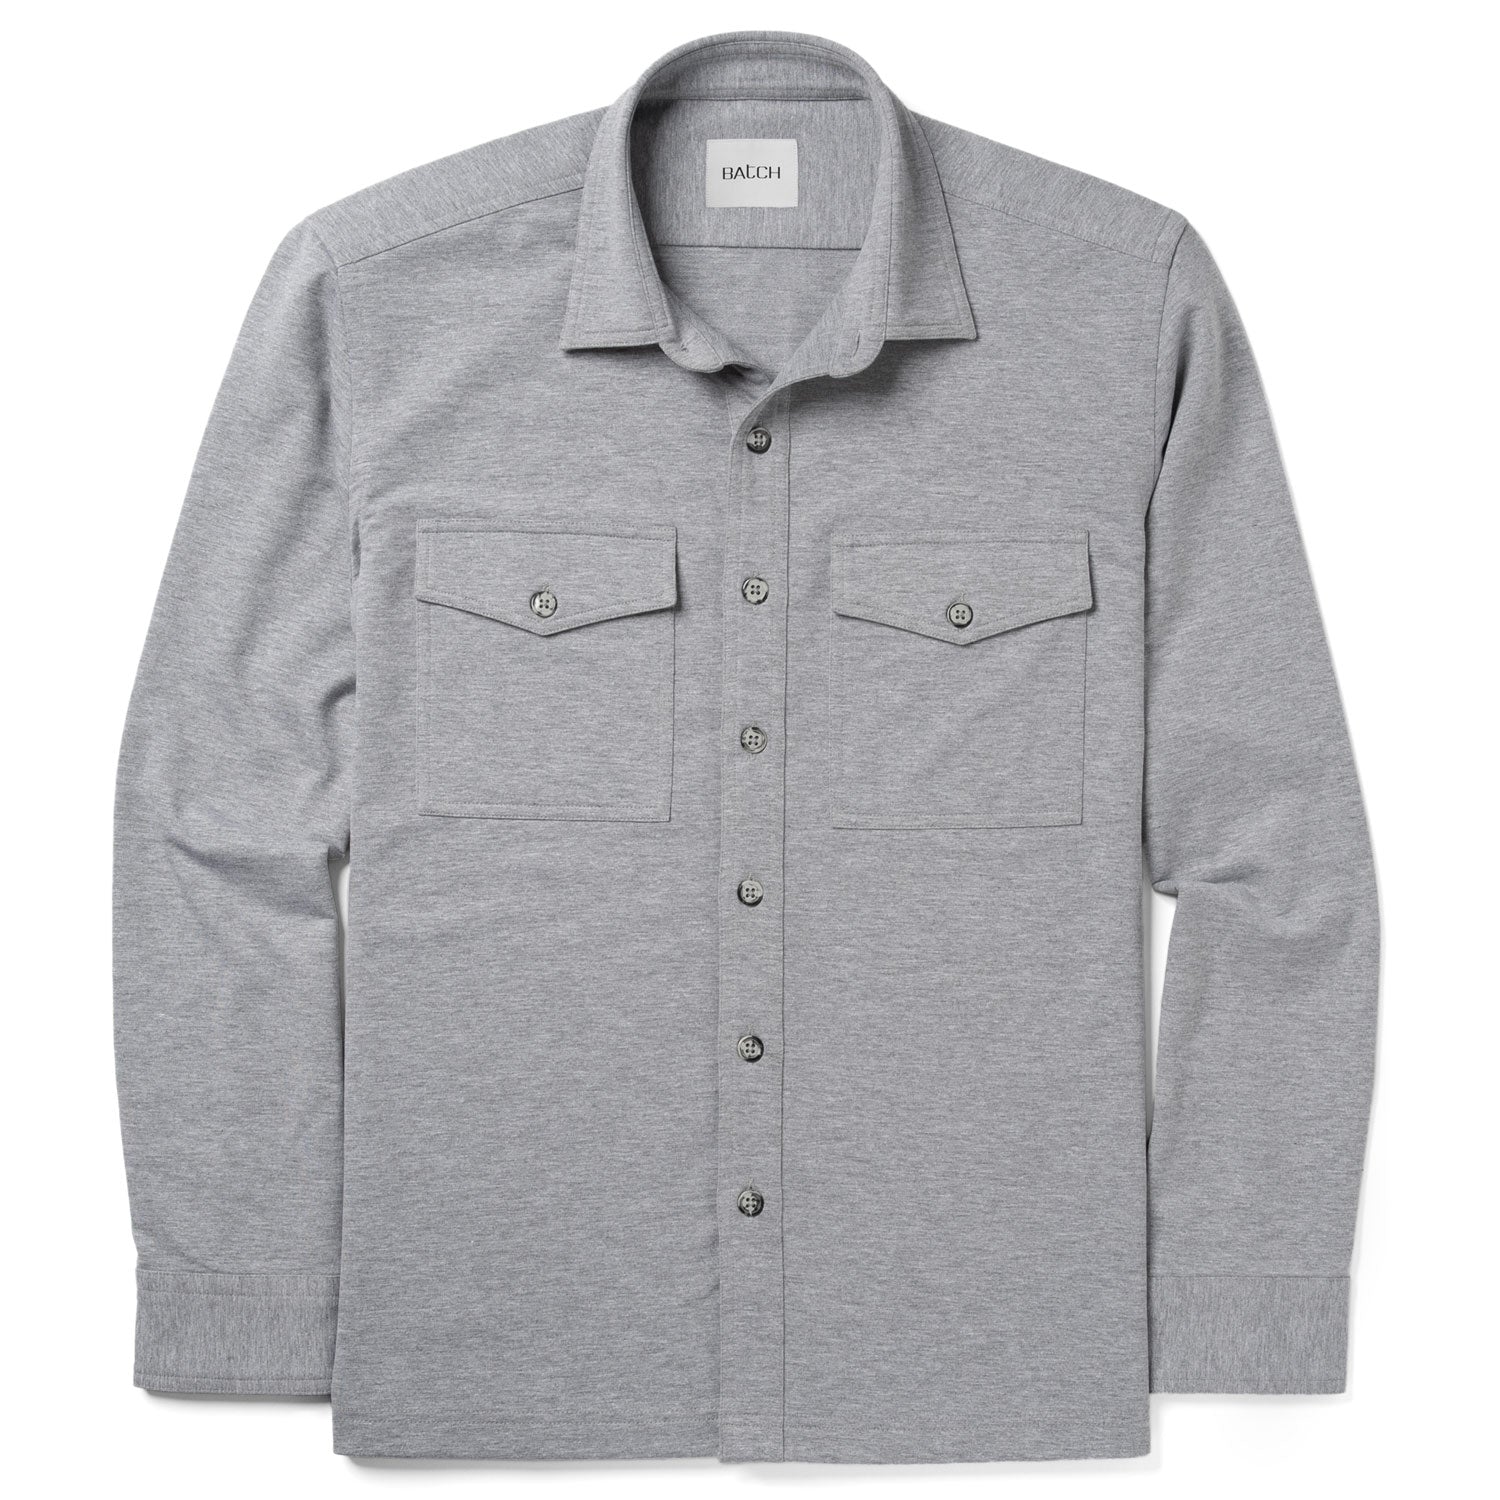 Distiller Overshirt Shirt - Granite Gray French Terry